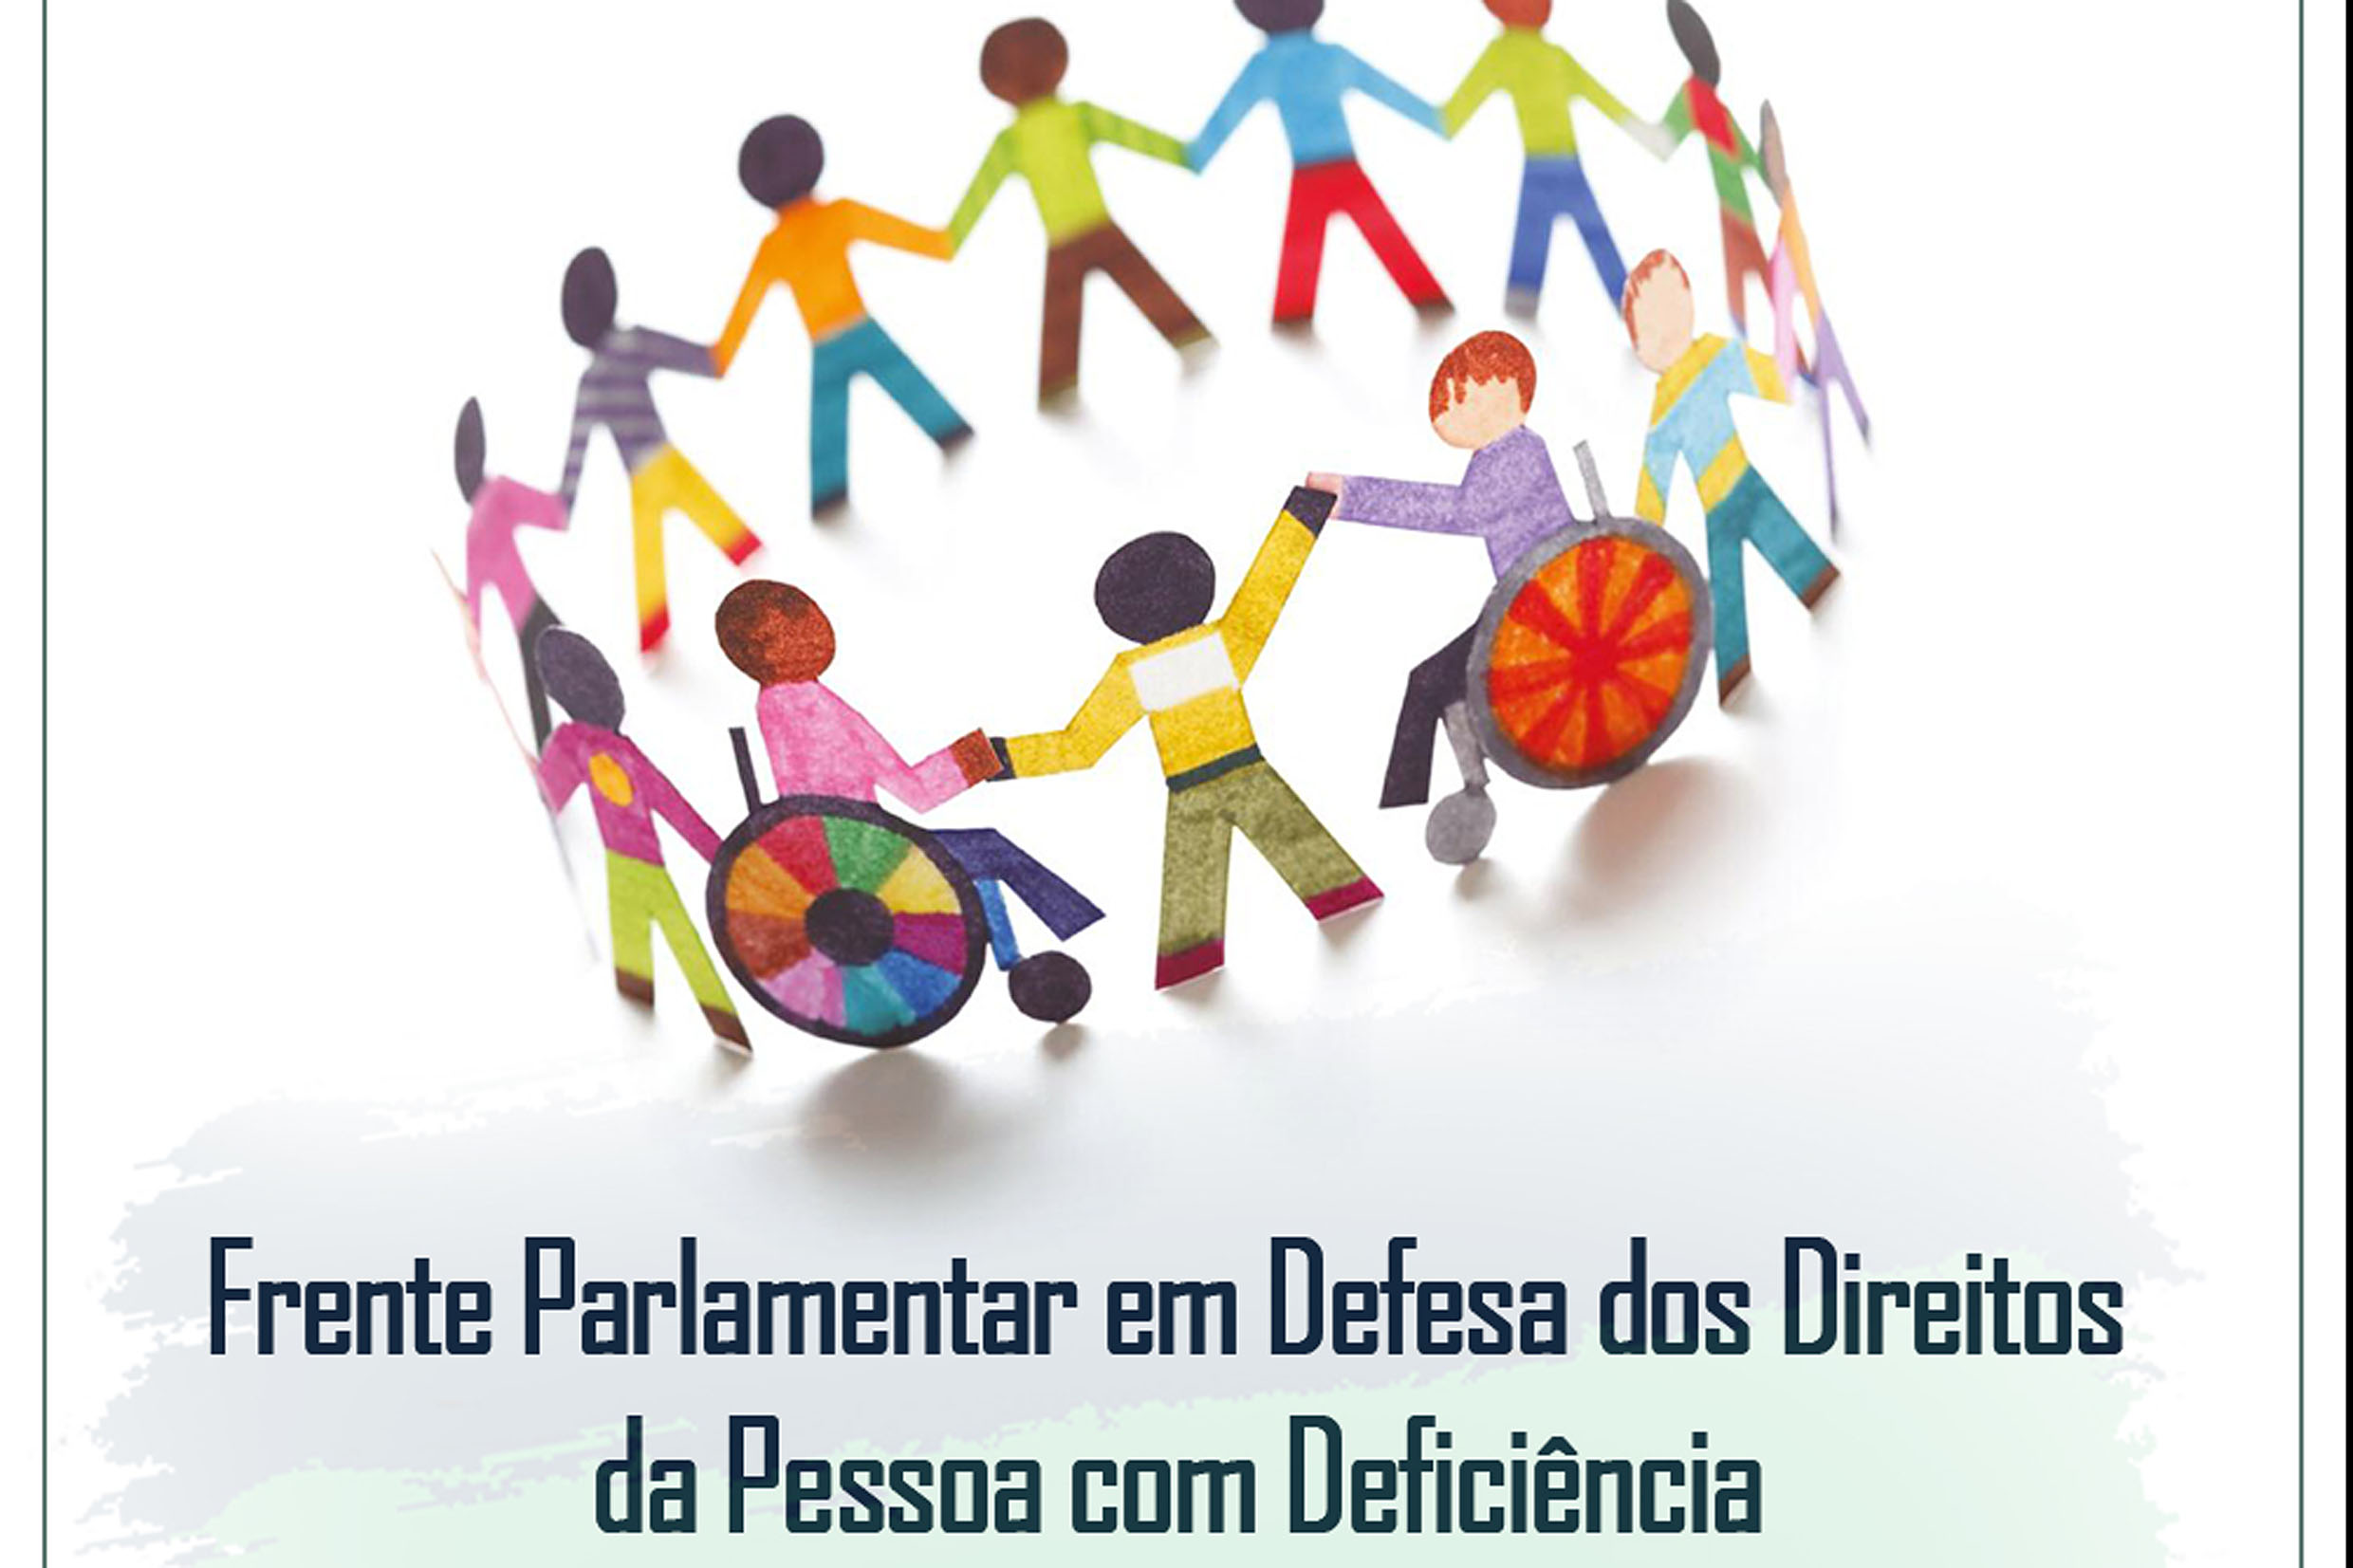 Valria Bolsonaro<a style='float:right;color:#ccc' href='https://www3.al.sp.gov.br/repositorio/noticia/N-09-2019/fg240190.jpg' target=_blank><i class='bi bi-zoom-in'></i> Clique para ver a imagem </a>